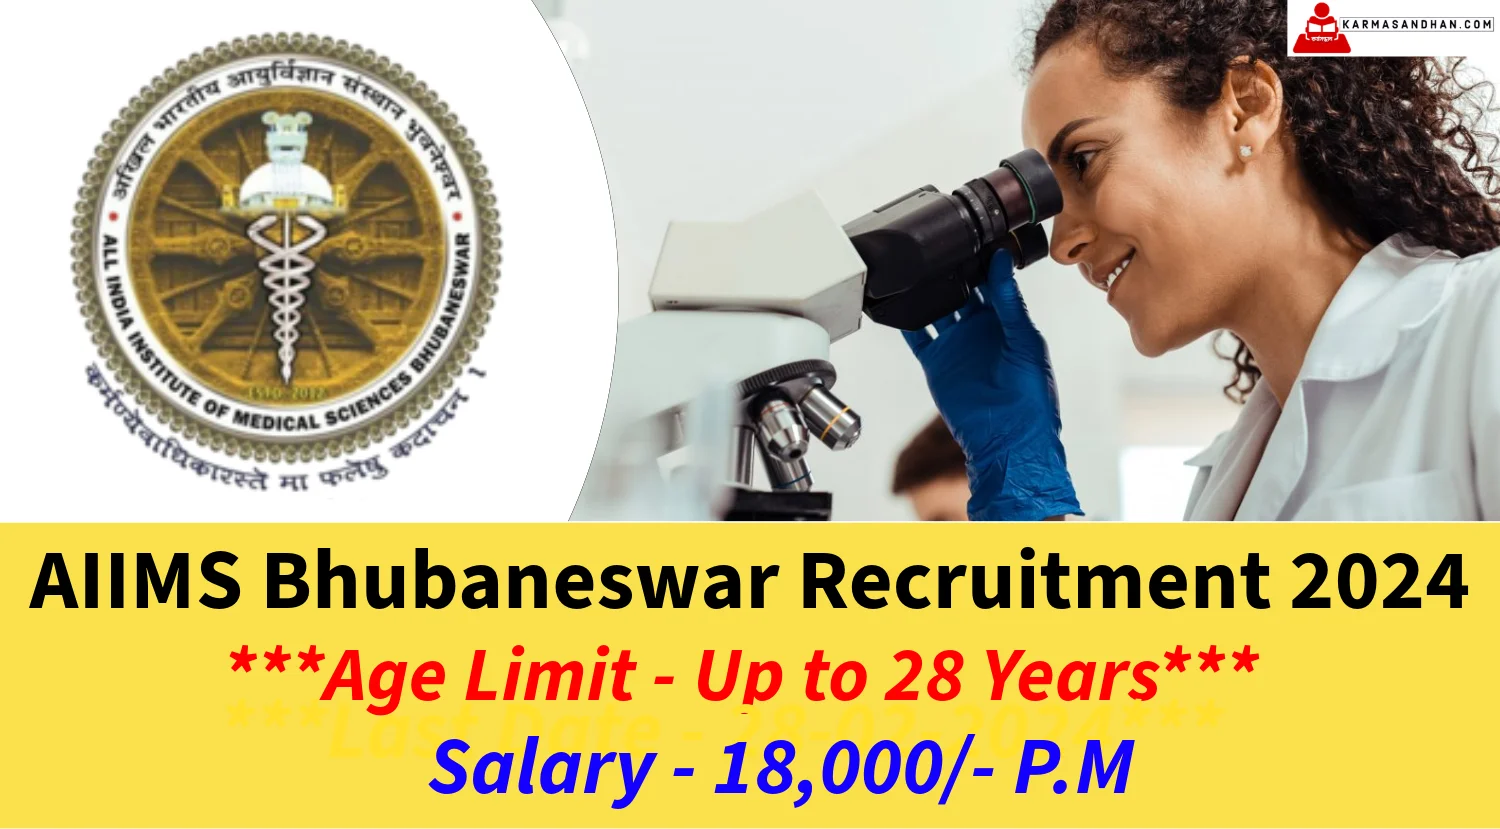 AIIMS Bhubaneswar Recruitment 2024 for Various Technical Vacancies